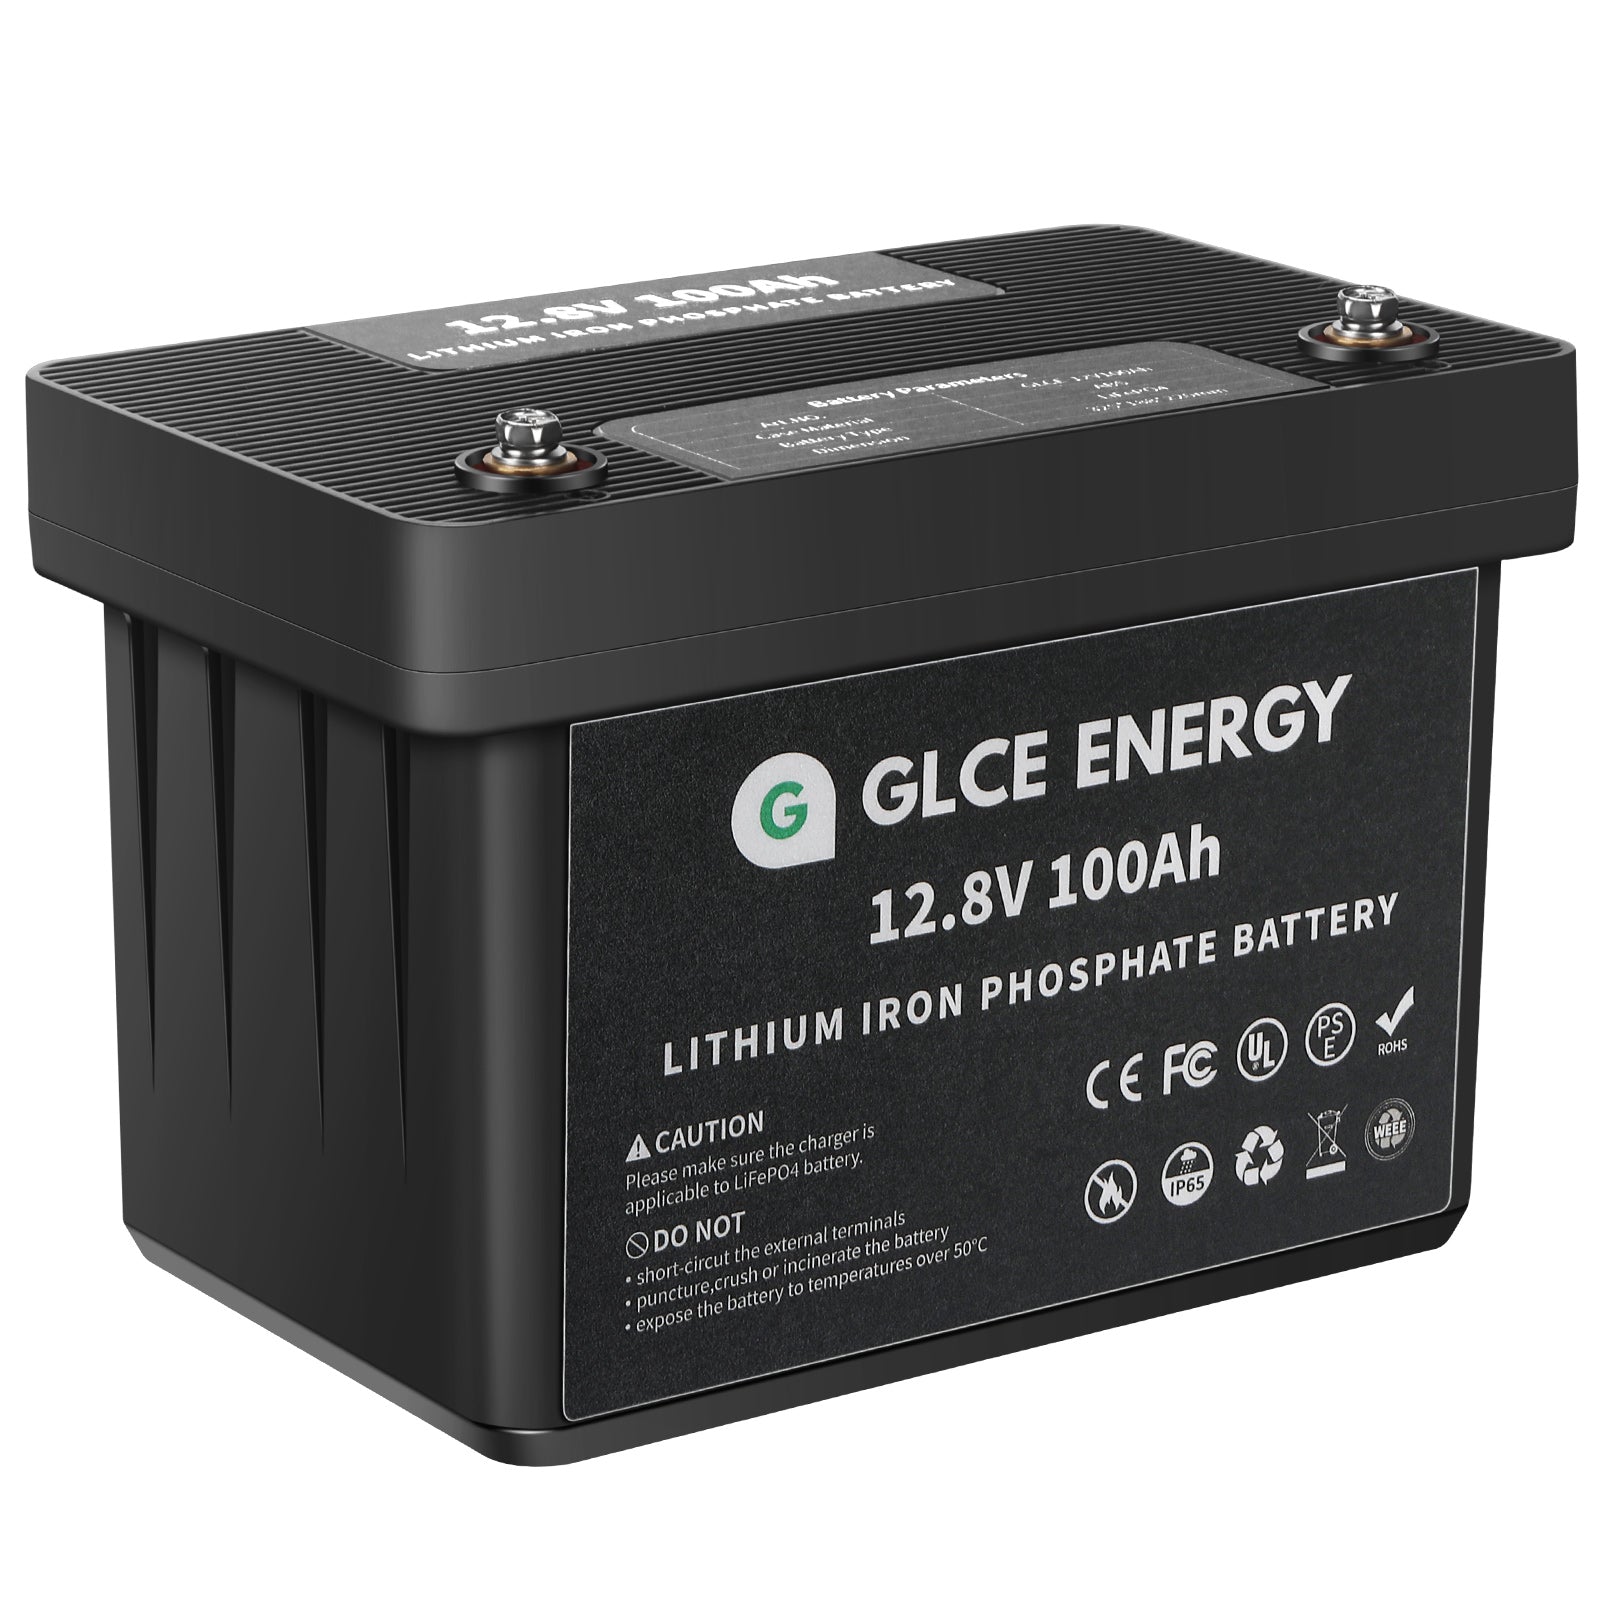 GLCE ENERGY 12.8V 100Ah Lithium Iron Phosphate Battery